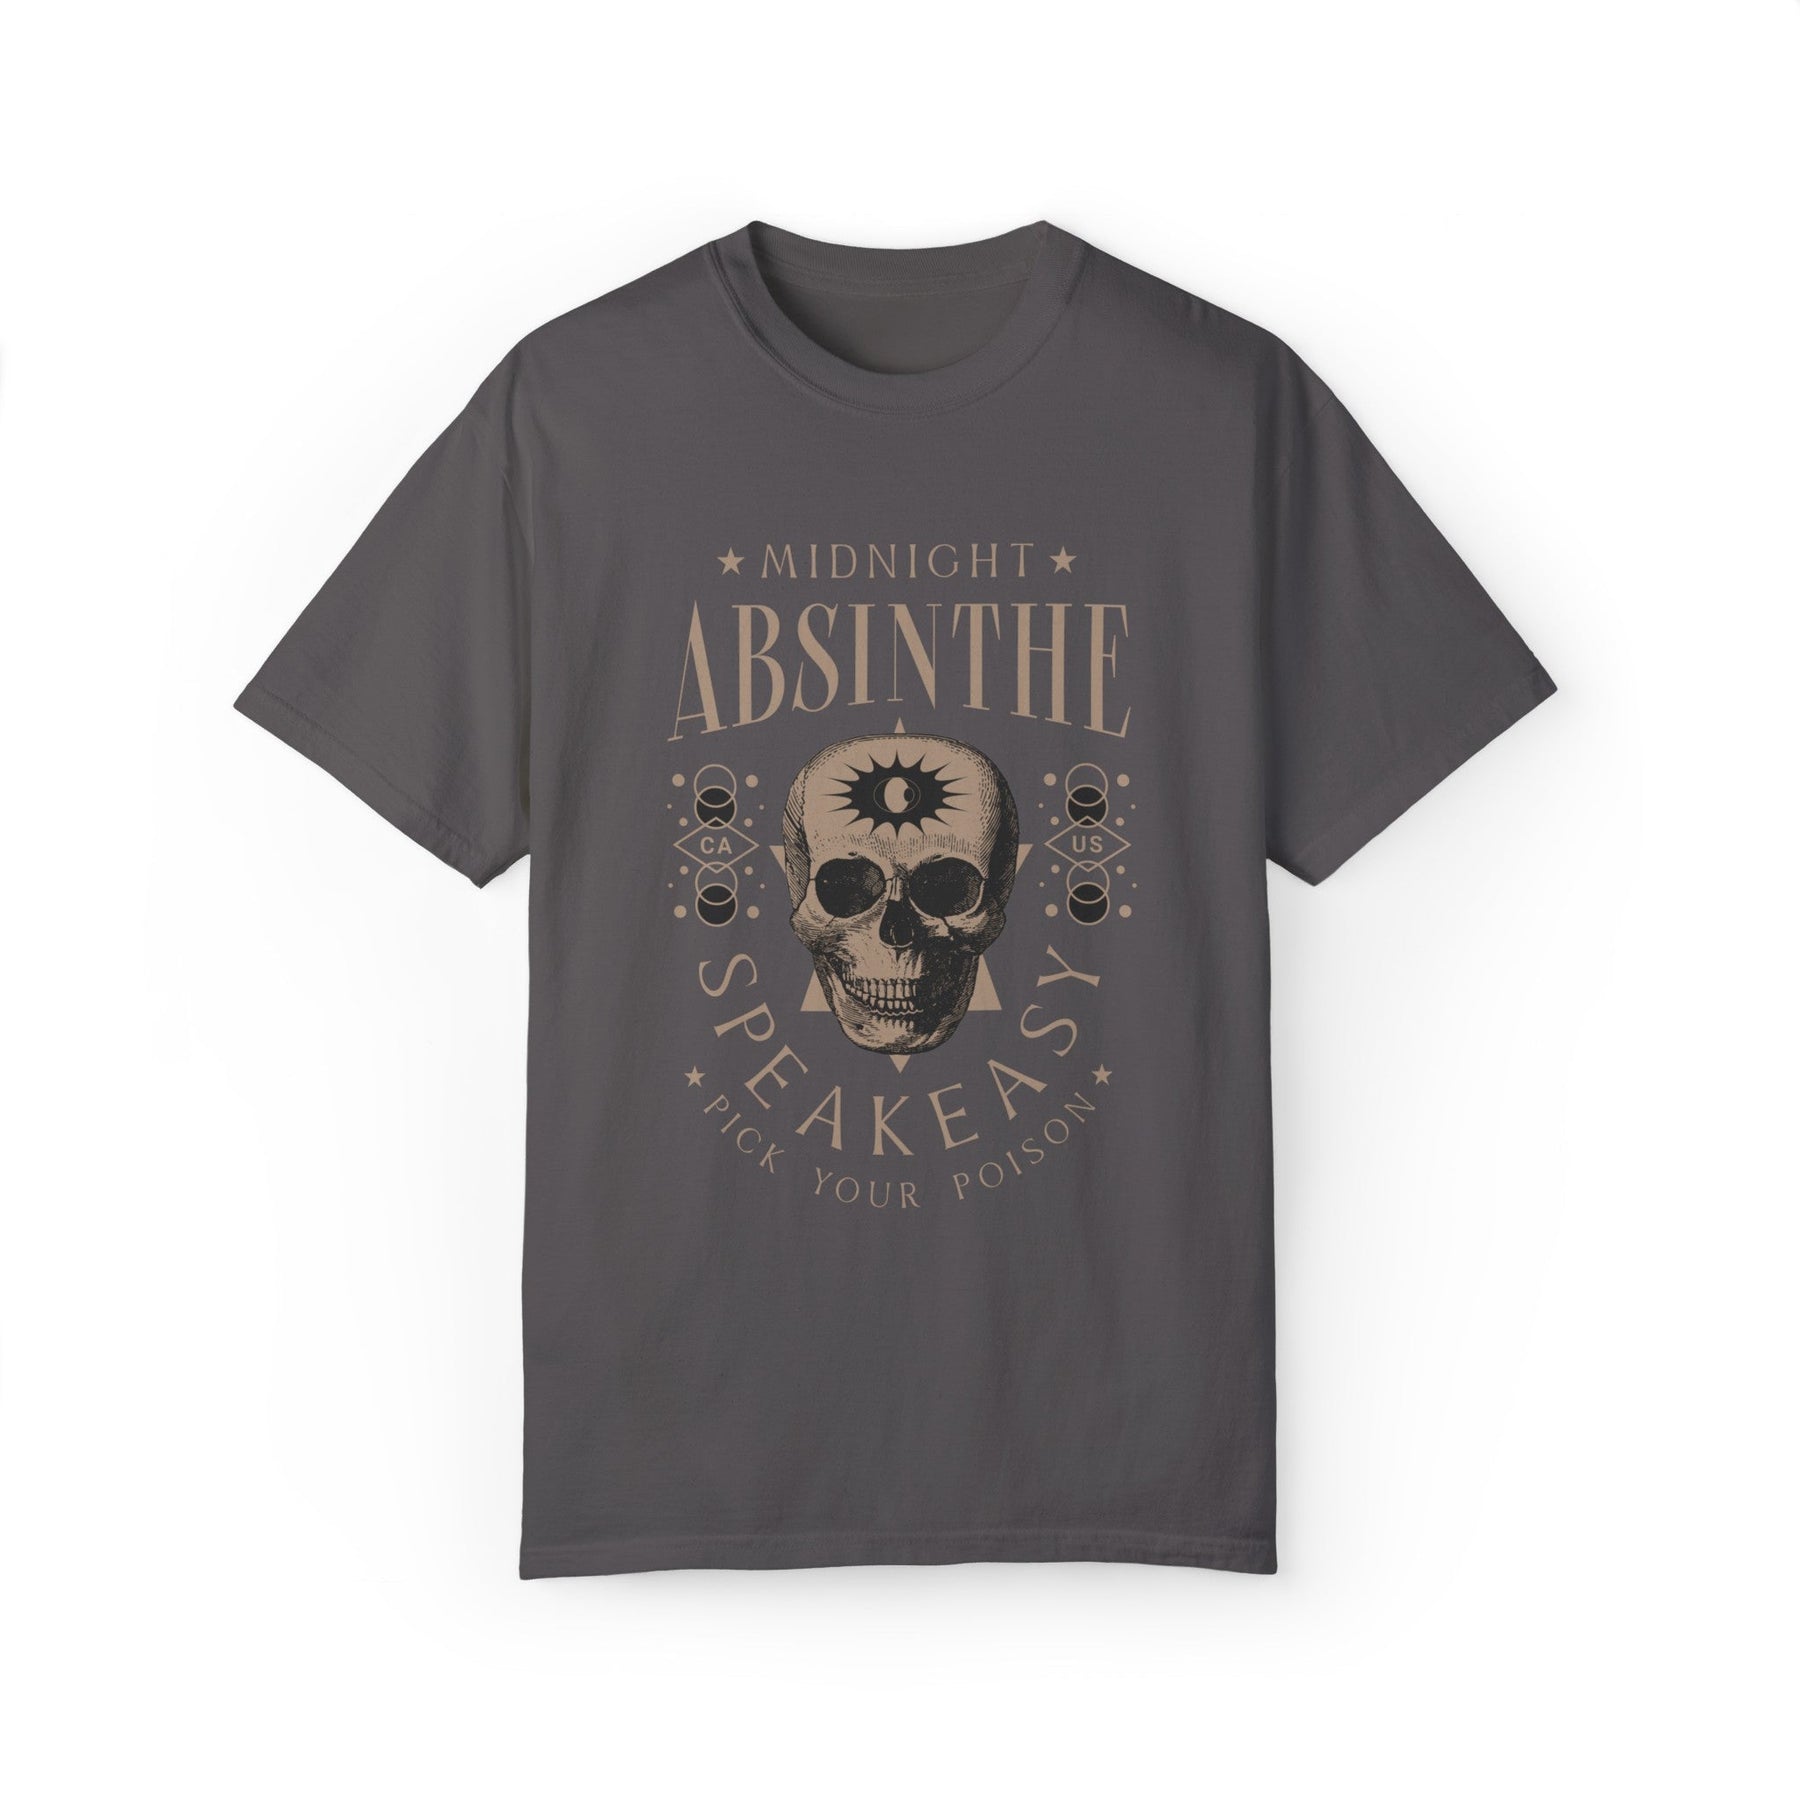 Midnight Absinthe Oversized Beefy Tee - Goth Cloth Co.T - Shirt13967029873139211822